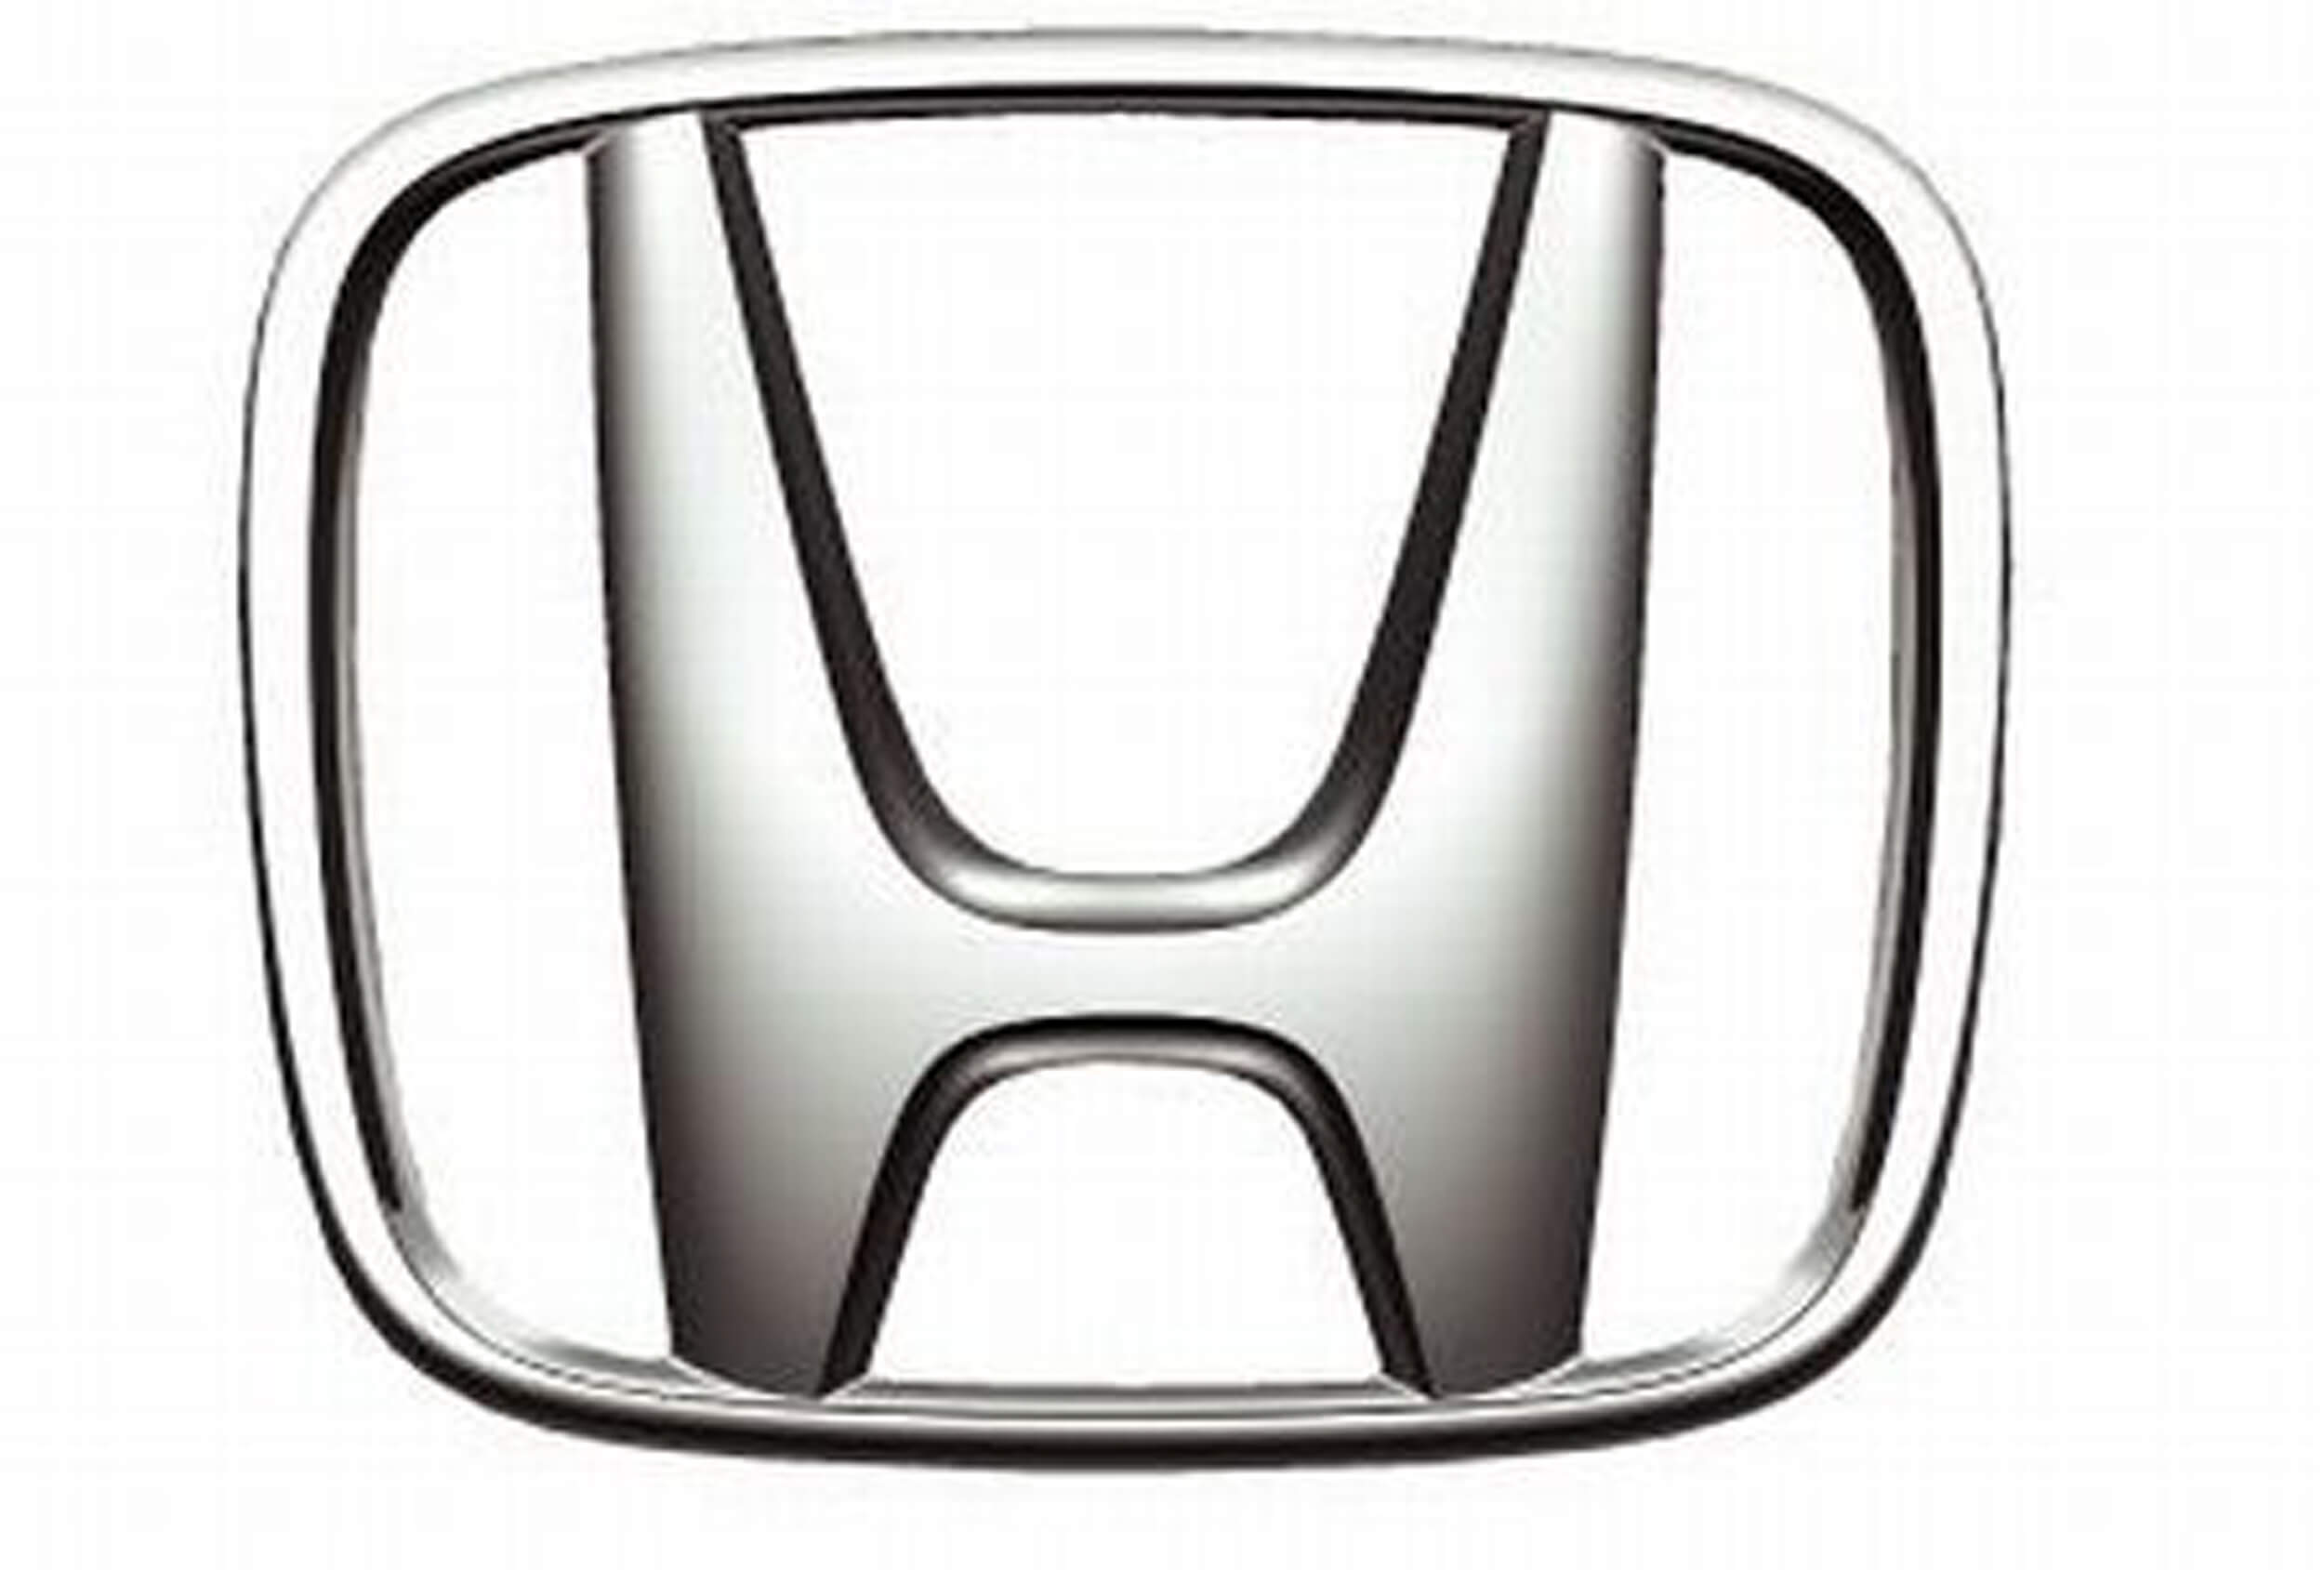 Honda auto parts wholesaler